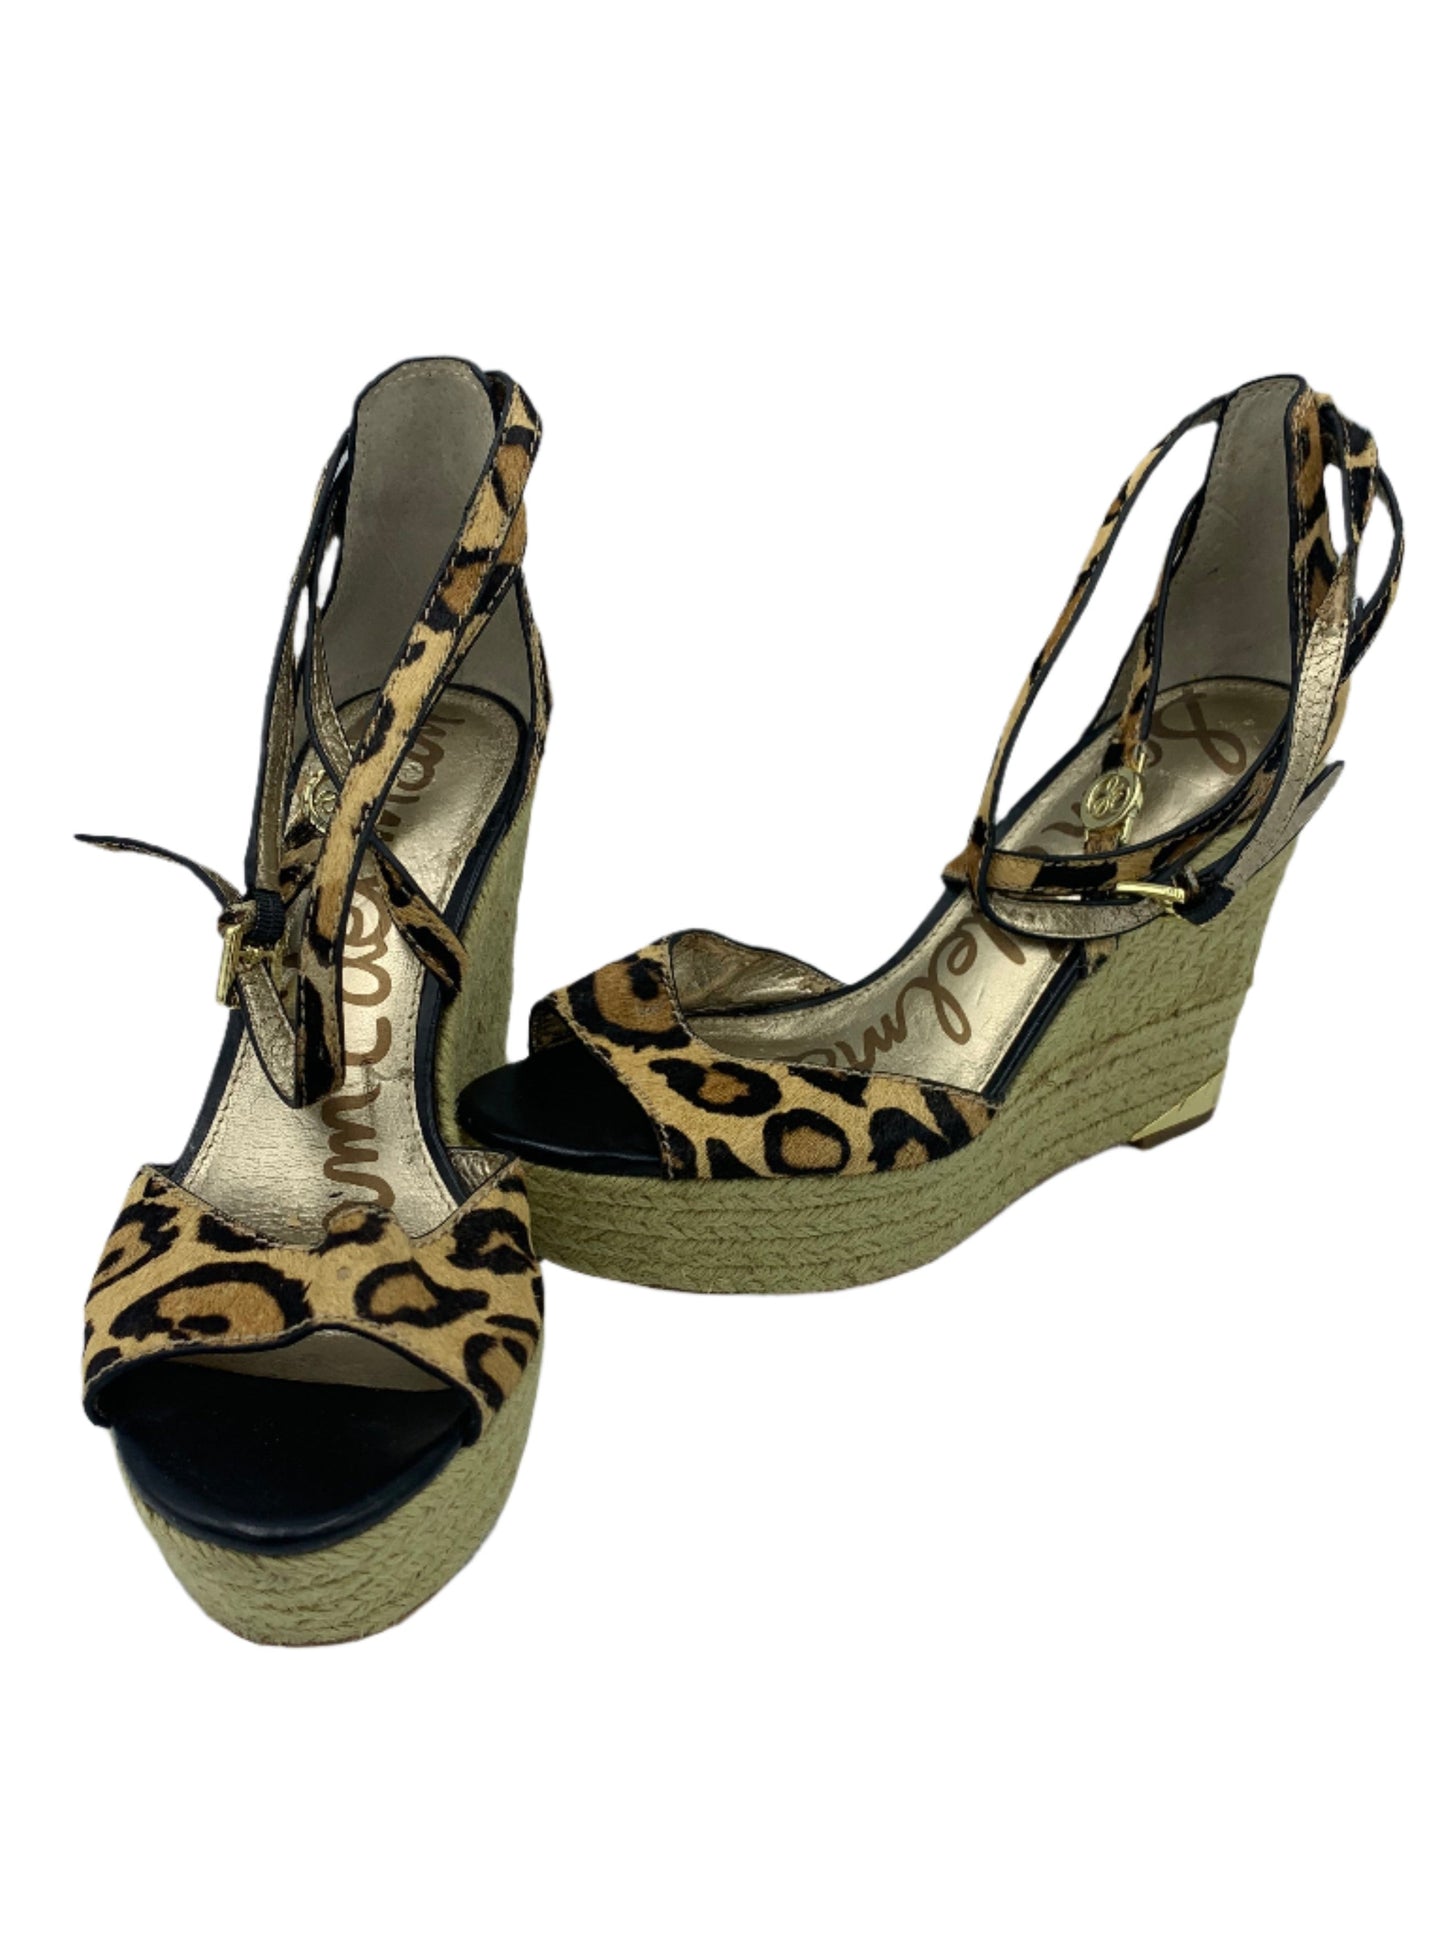 Animal Print Shoes Heels Block Sam Edelman, Size 8.5